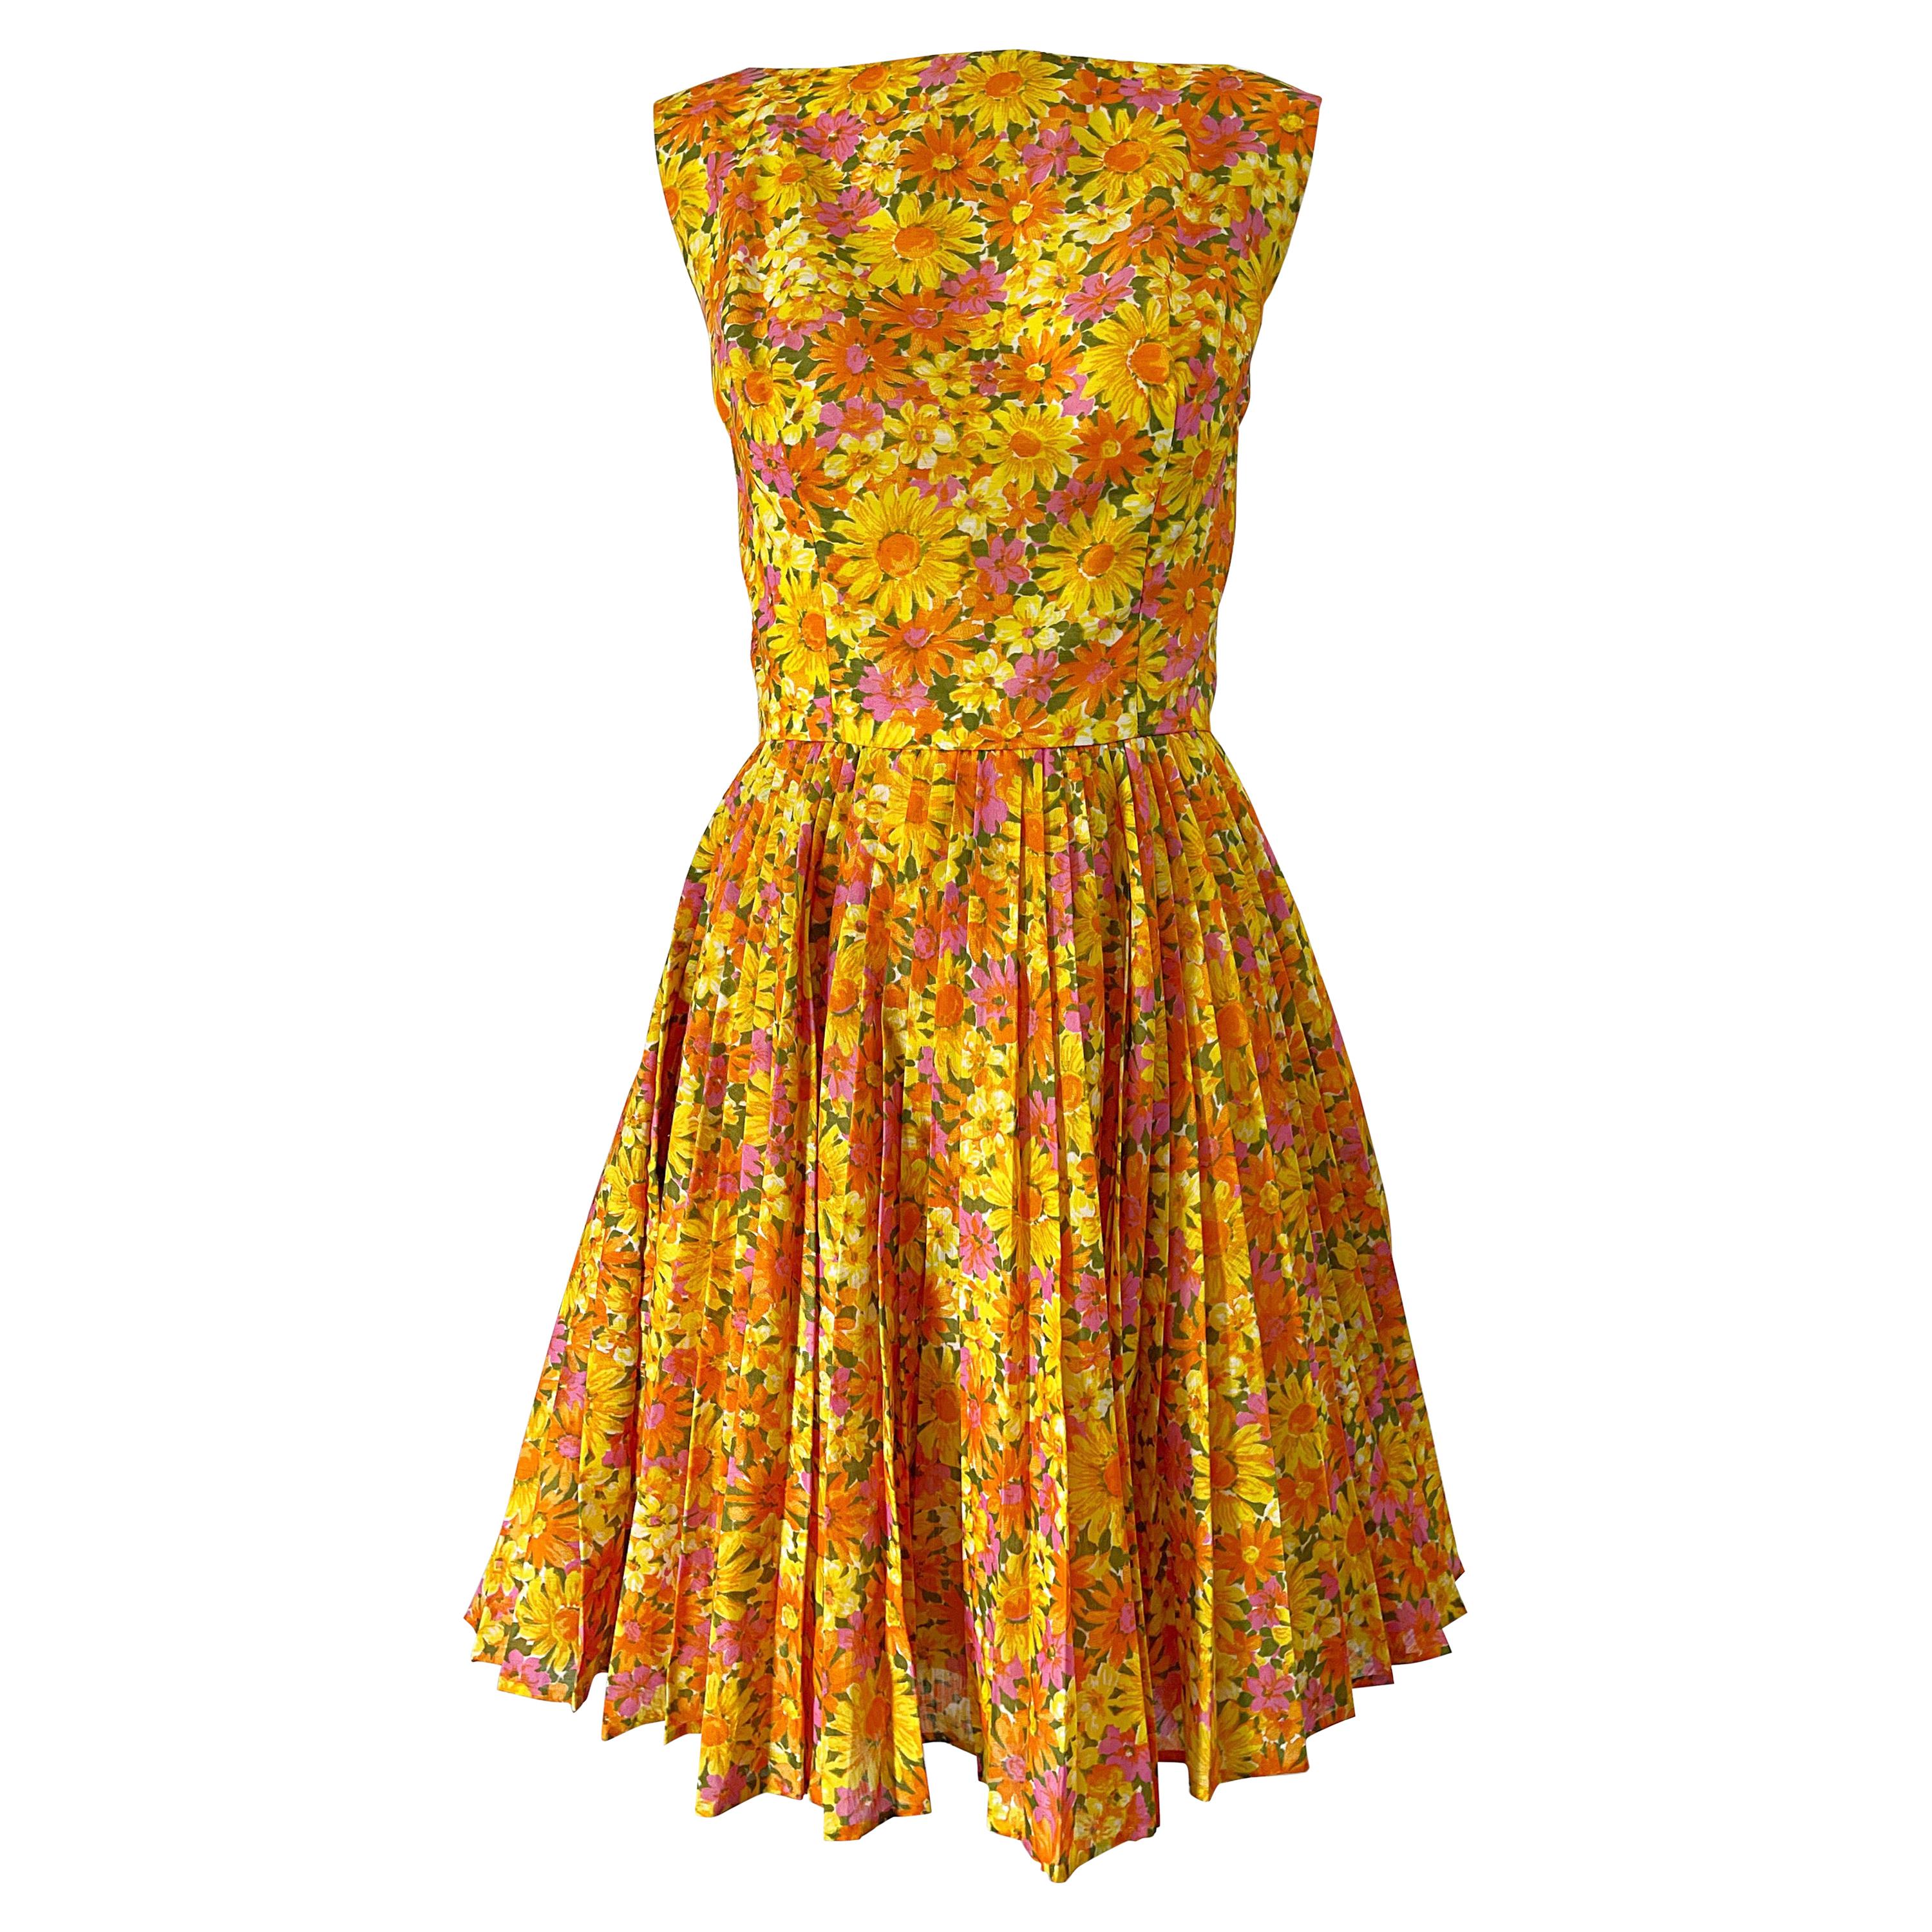 1950s Suzy Perette Yellow Pink Orange Daisy Print Cotton Vintage 50s Dress